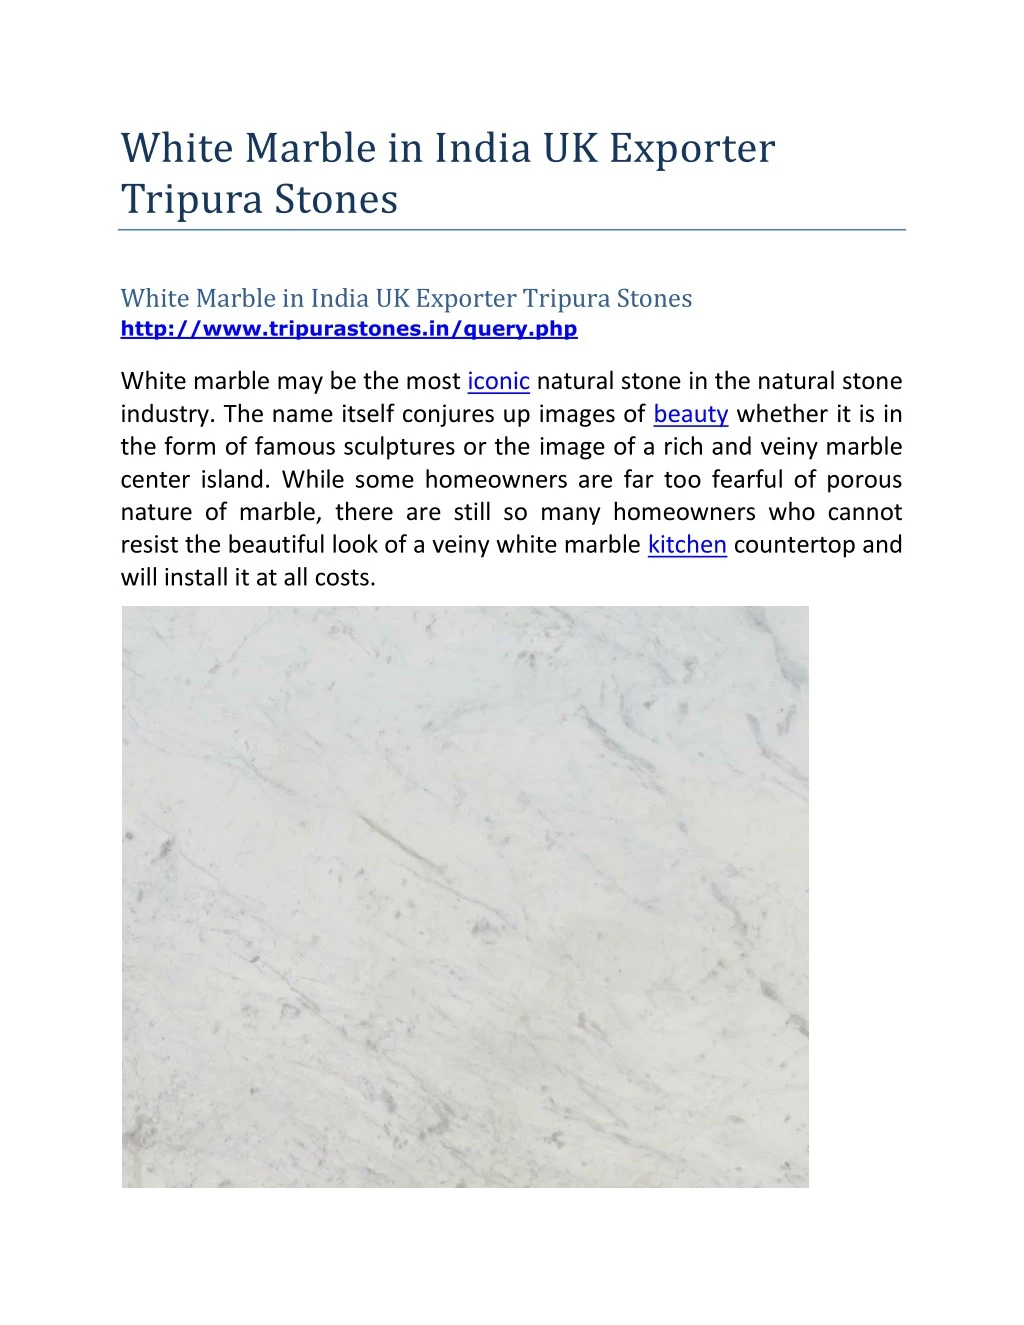 white marble in india uk exporter tripura stones